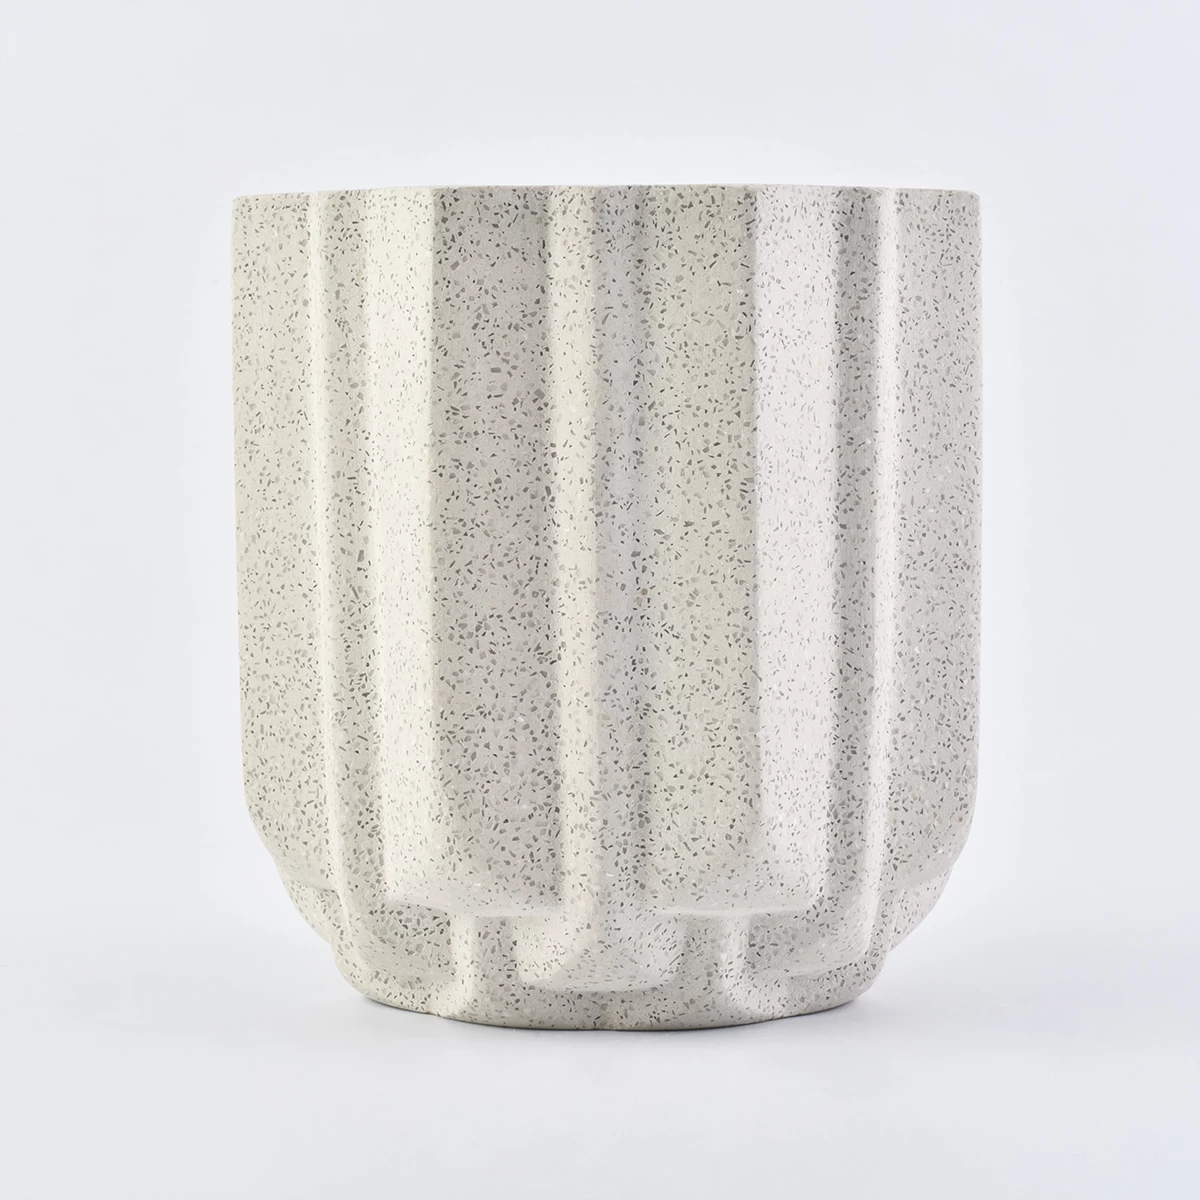 13oz concrete cement ceramic candle jars from Sunny Glassware